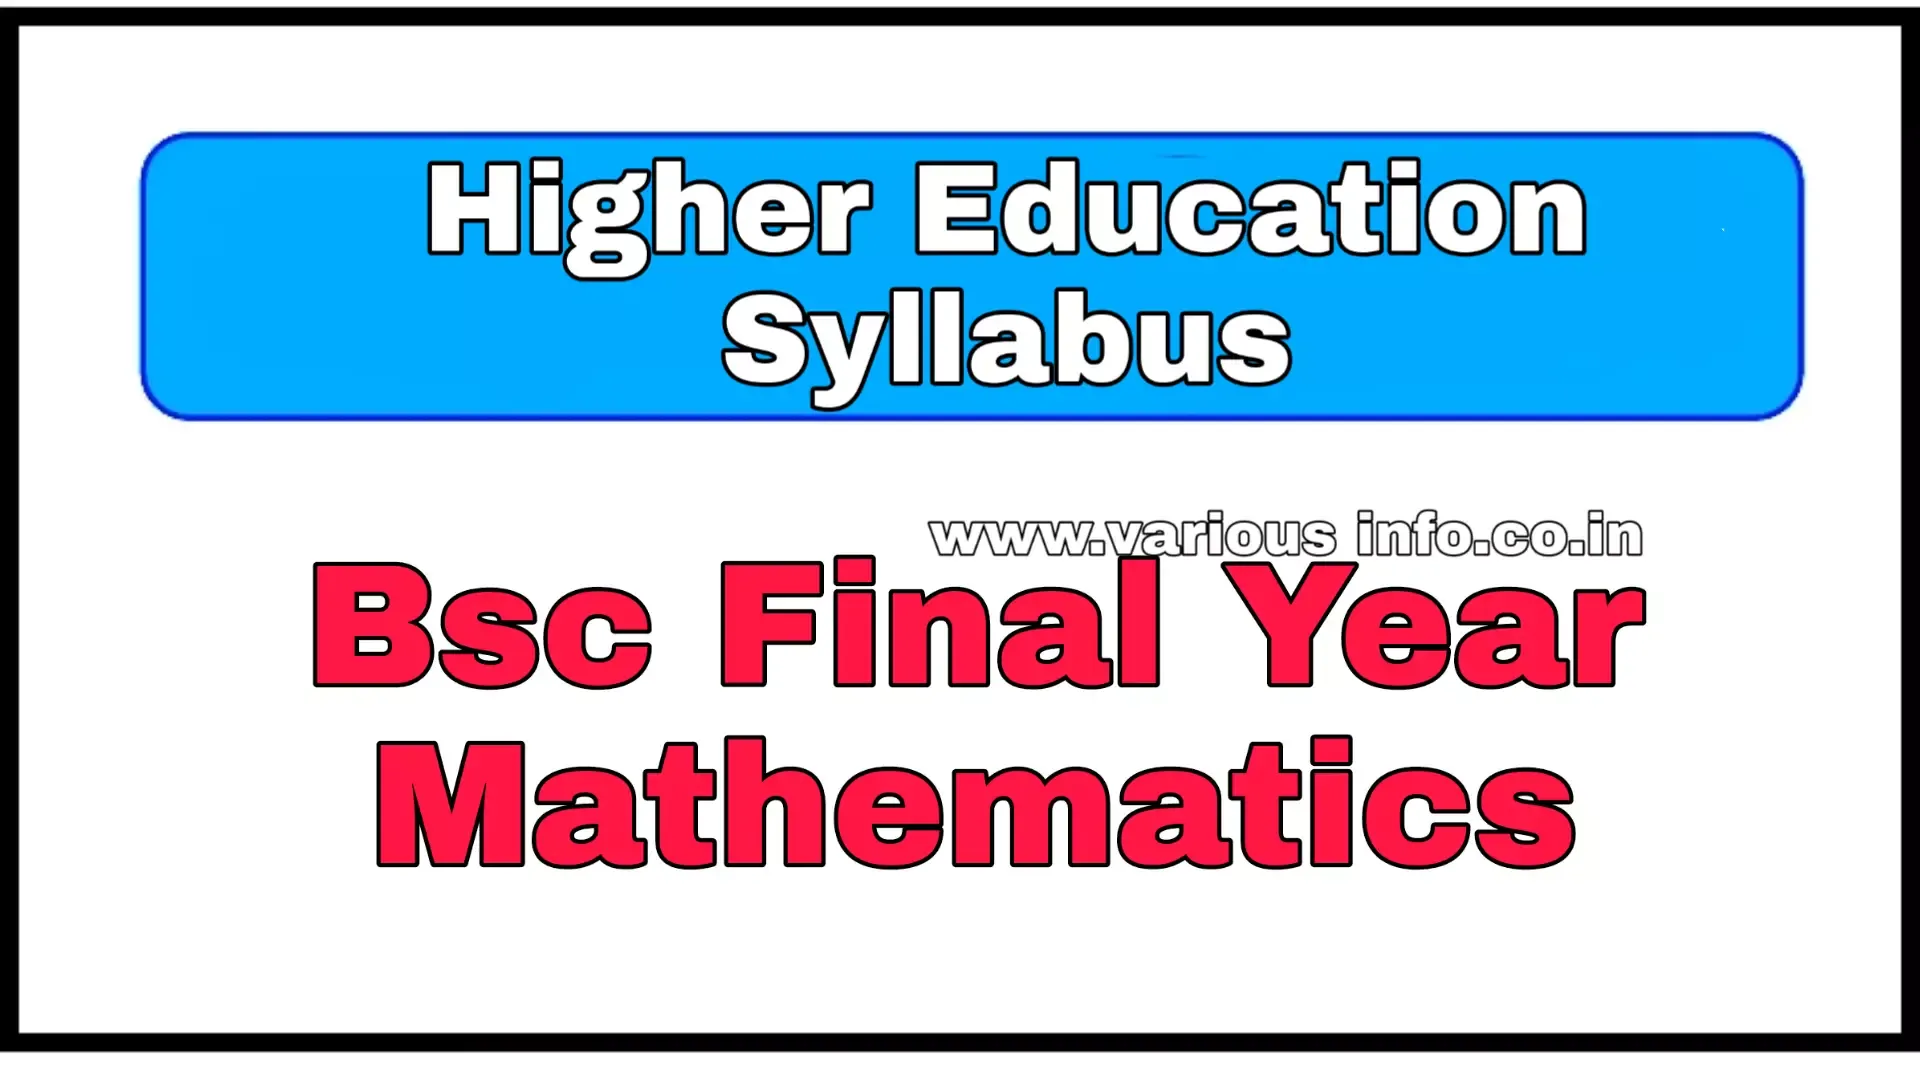 Bsc final year mathematics syllabus 2021 Download pdf , higher education syllabus pdf